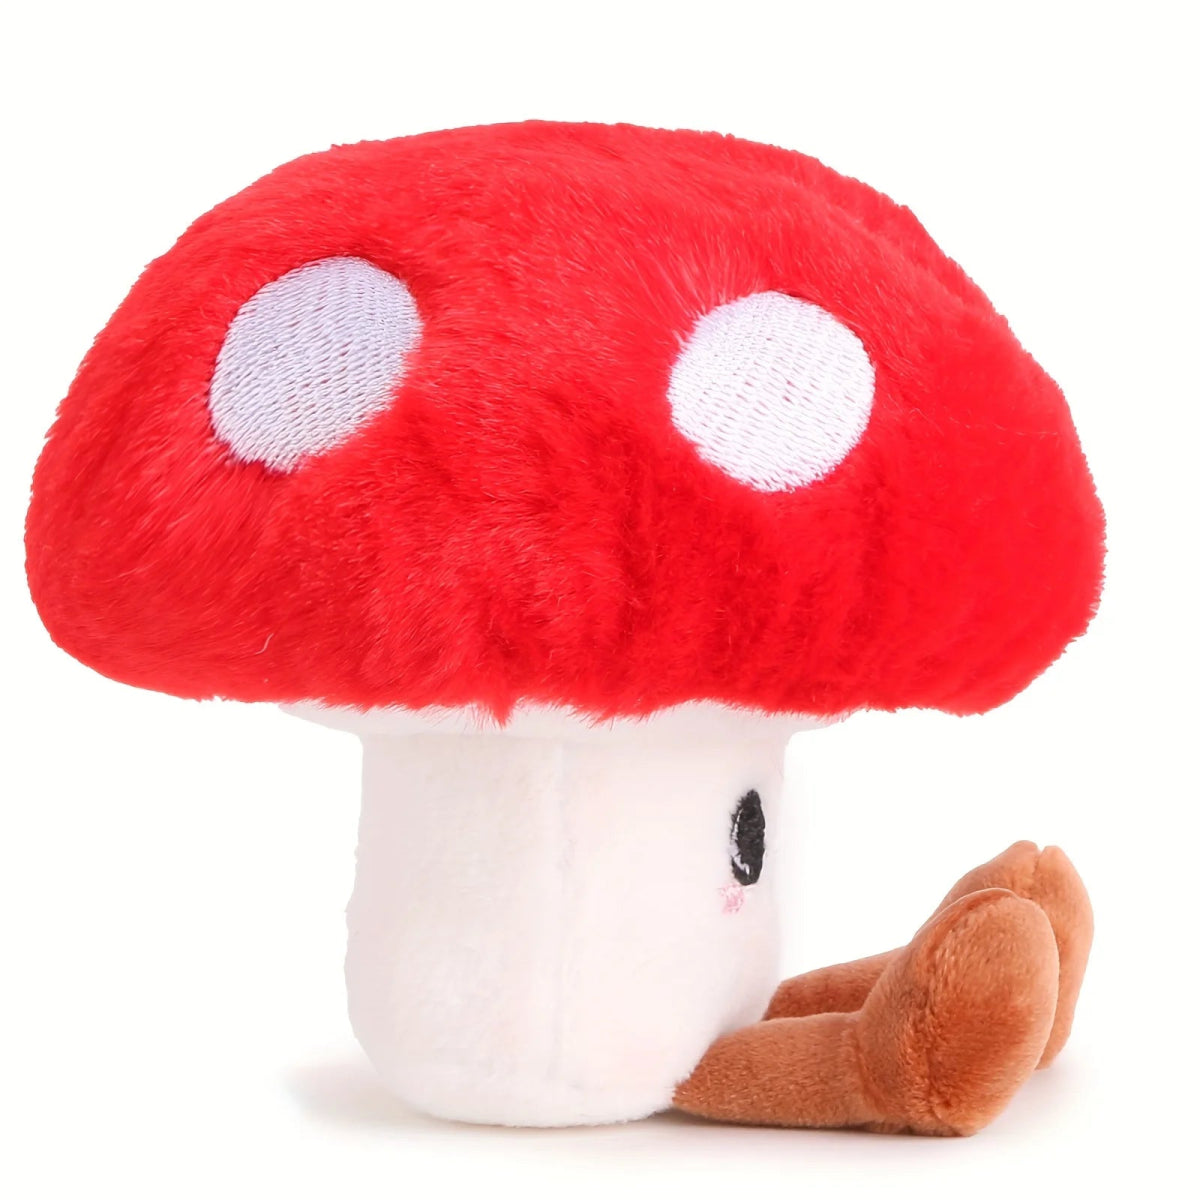 Red Mushroom Plush Educational Toy - Soft Plush Toys - Scribble Snacks